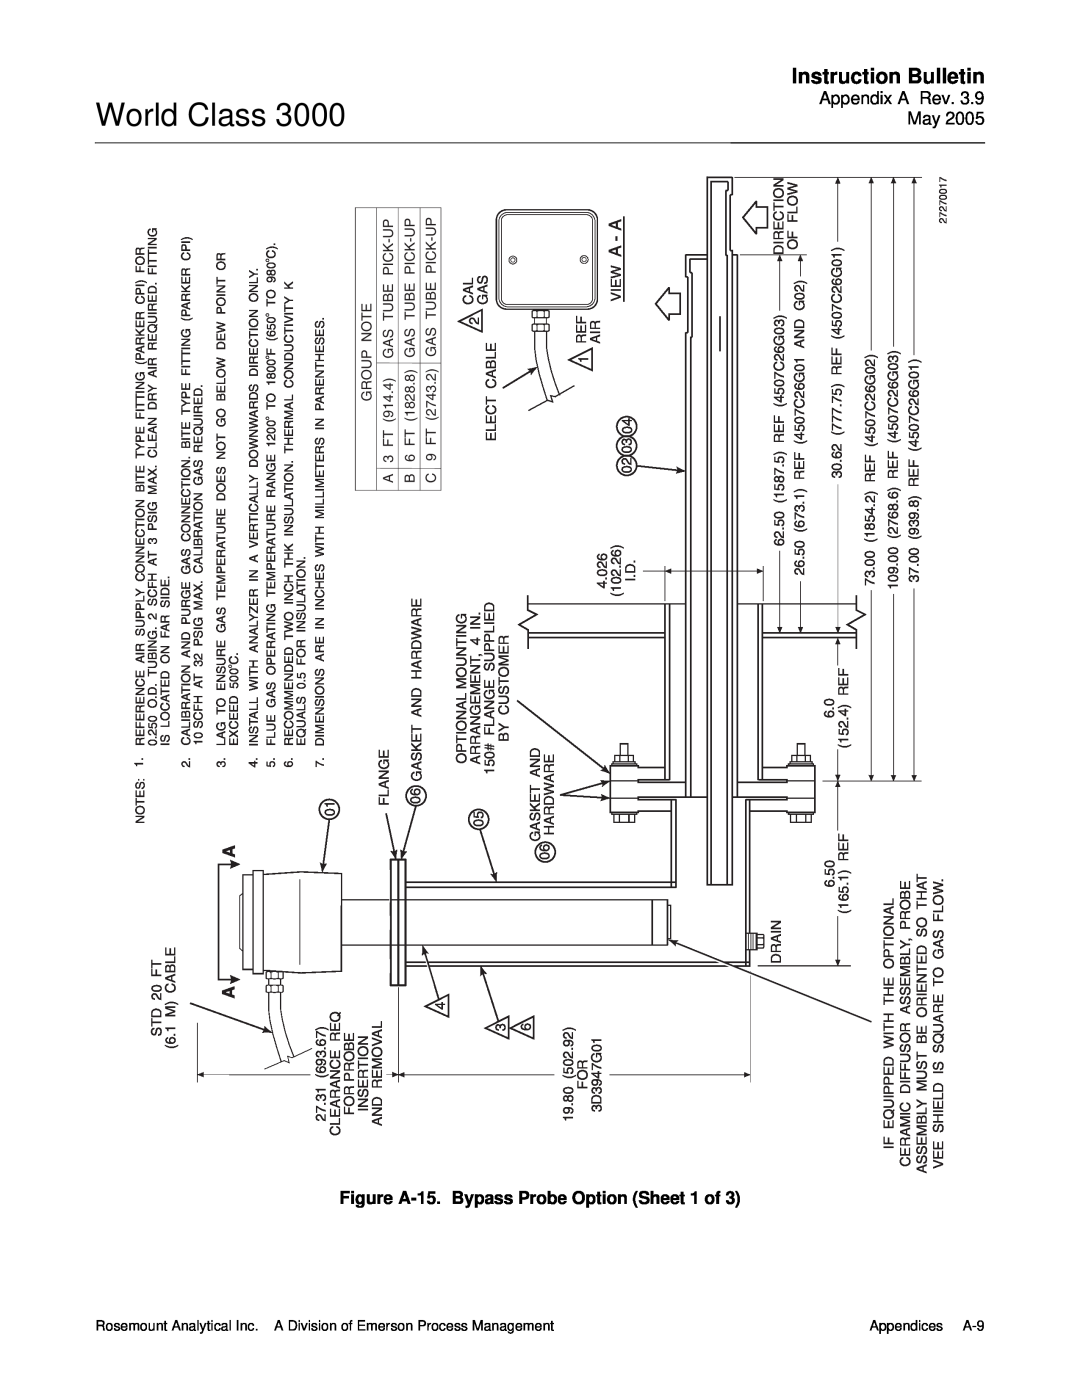 Emerson 3000 instruction manual World Class, Instruction Bulletin, Figure A-15.Bypass Probe Option Sheet 1 of 